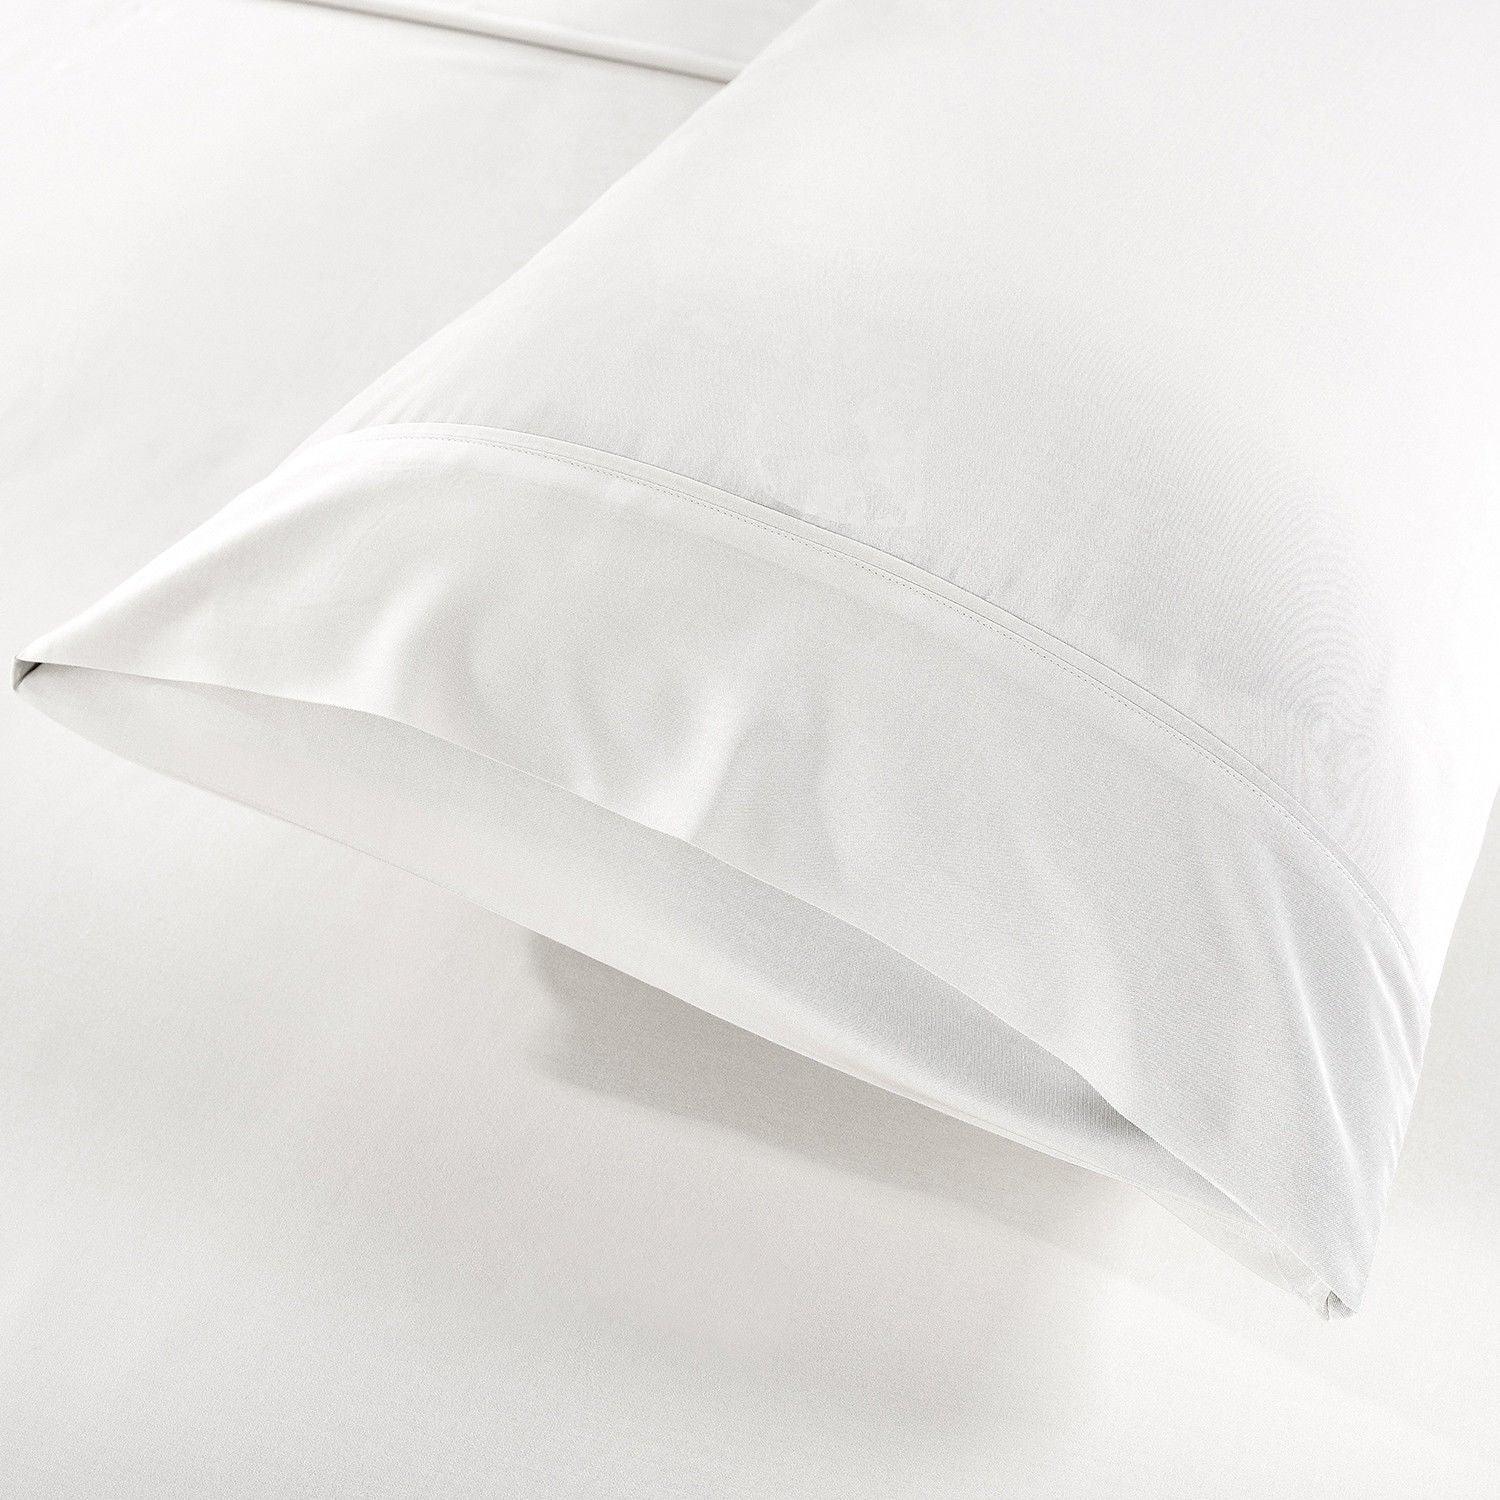 Royal Comfort Bamboo Blended Sheet & Pillowcases Set 1000TC Ultra Soft Bedding - King - White